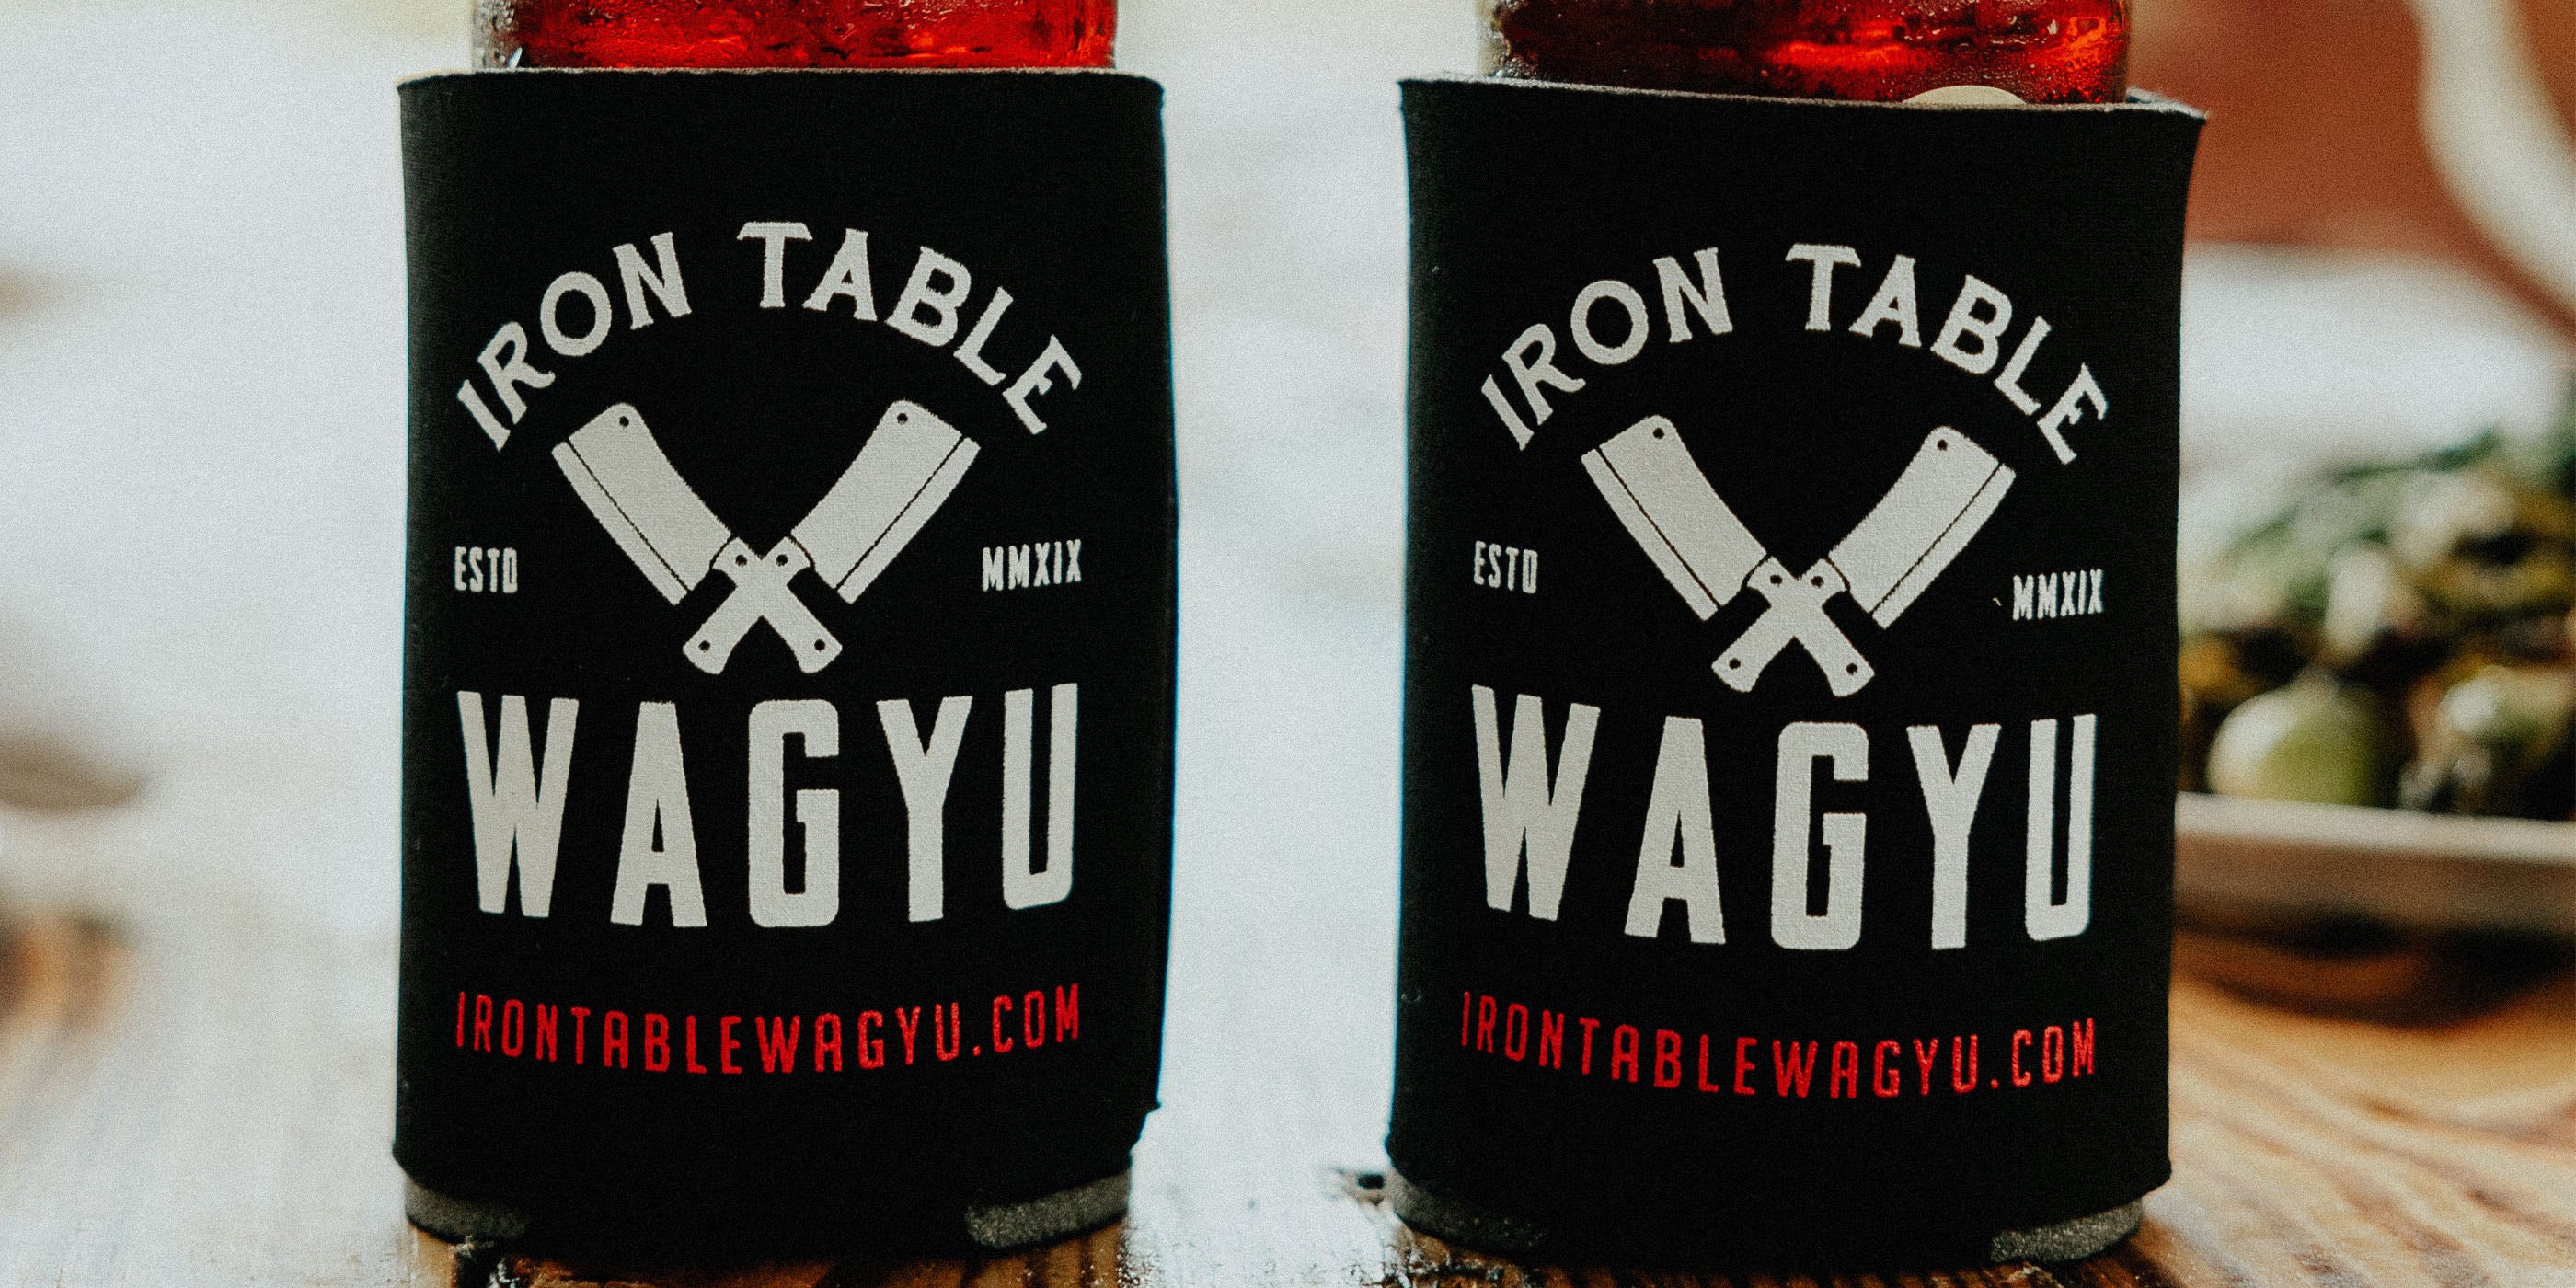 Iron Table Wagyu Merchandise, Iron Table Shirts, Iron Table Hats, Iron Table Wagyu